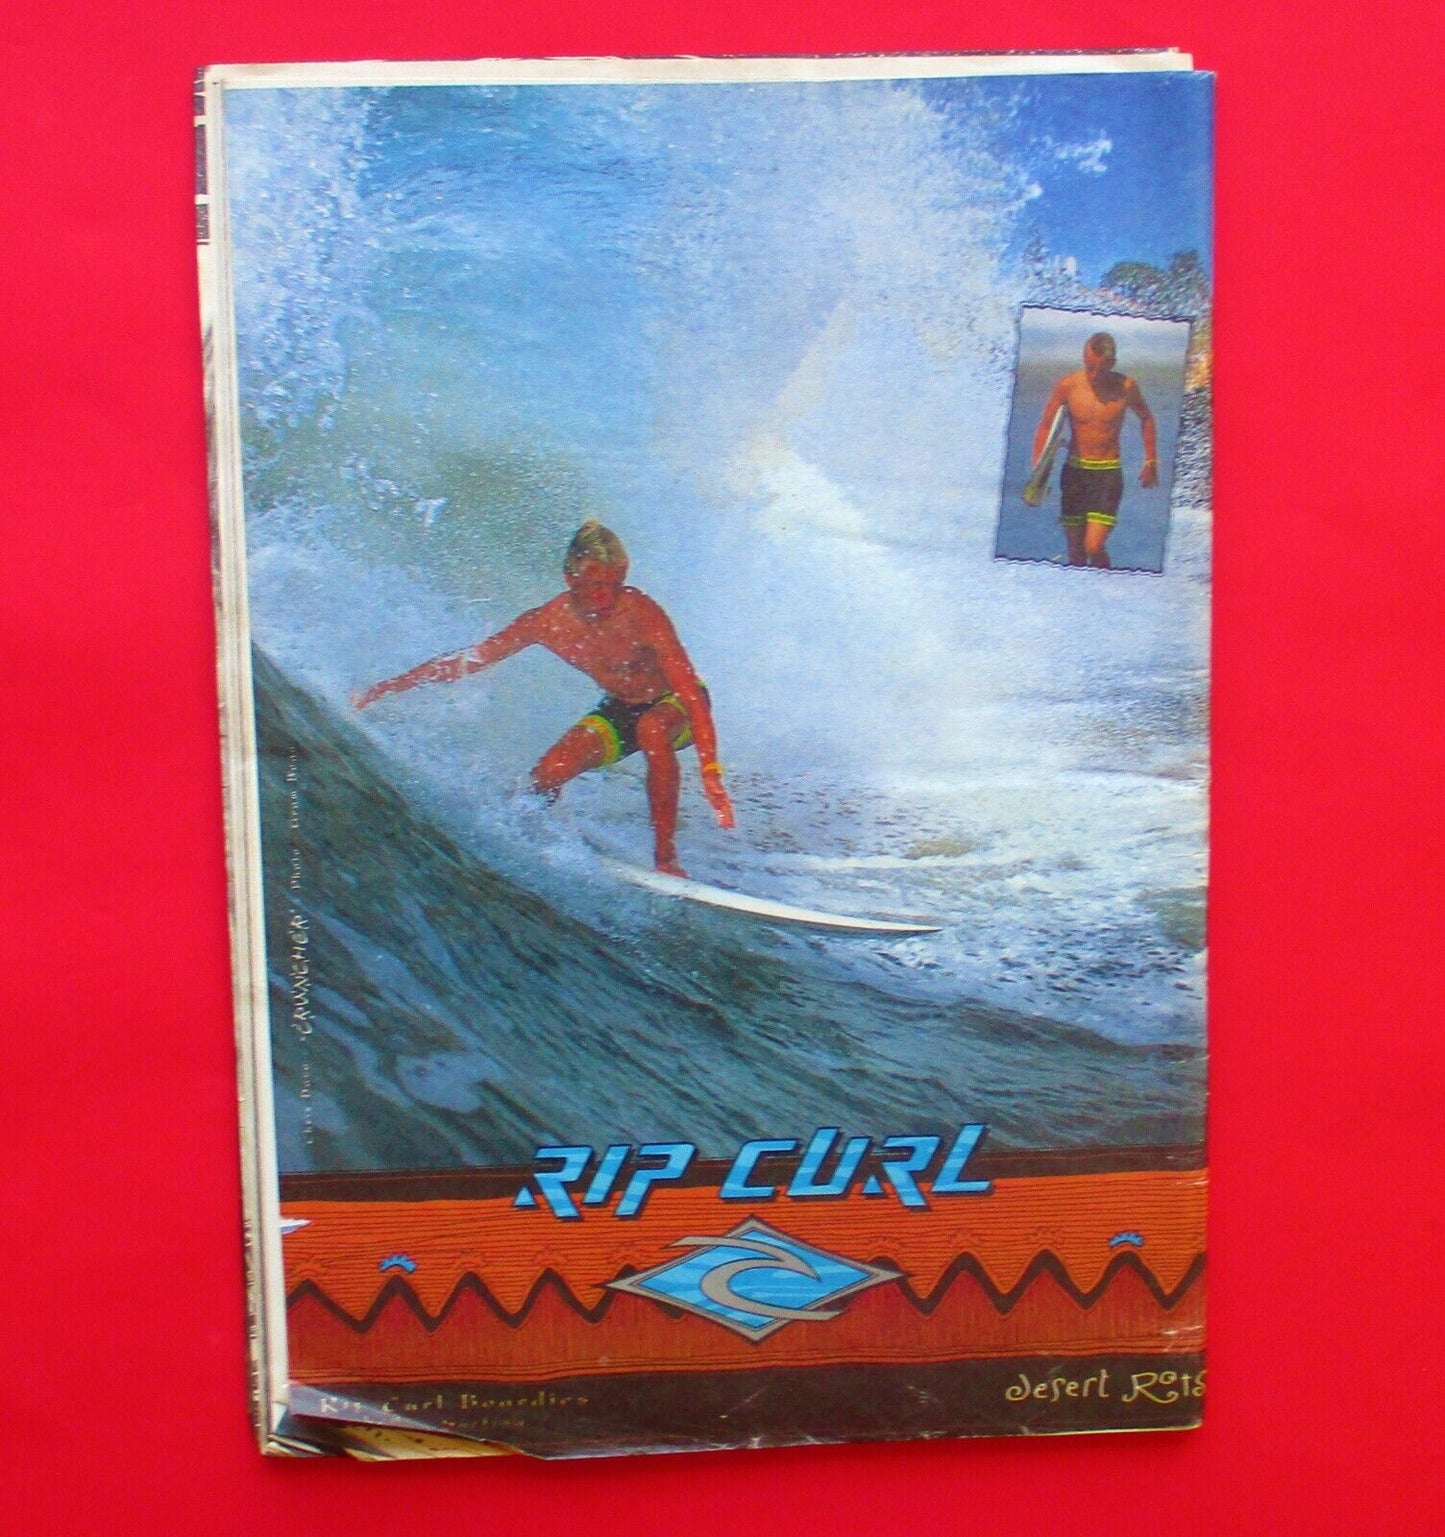 Tracks Magazine November 1991 Australian Surfing Barton Lynch